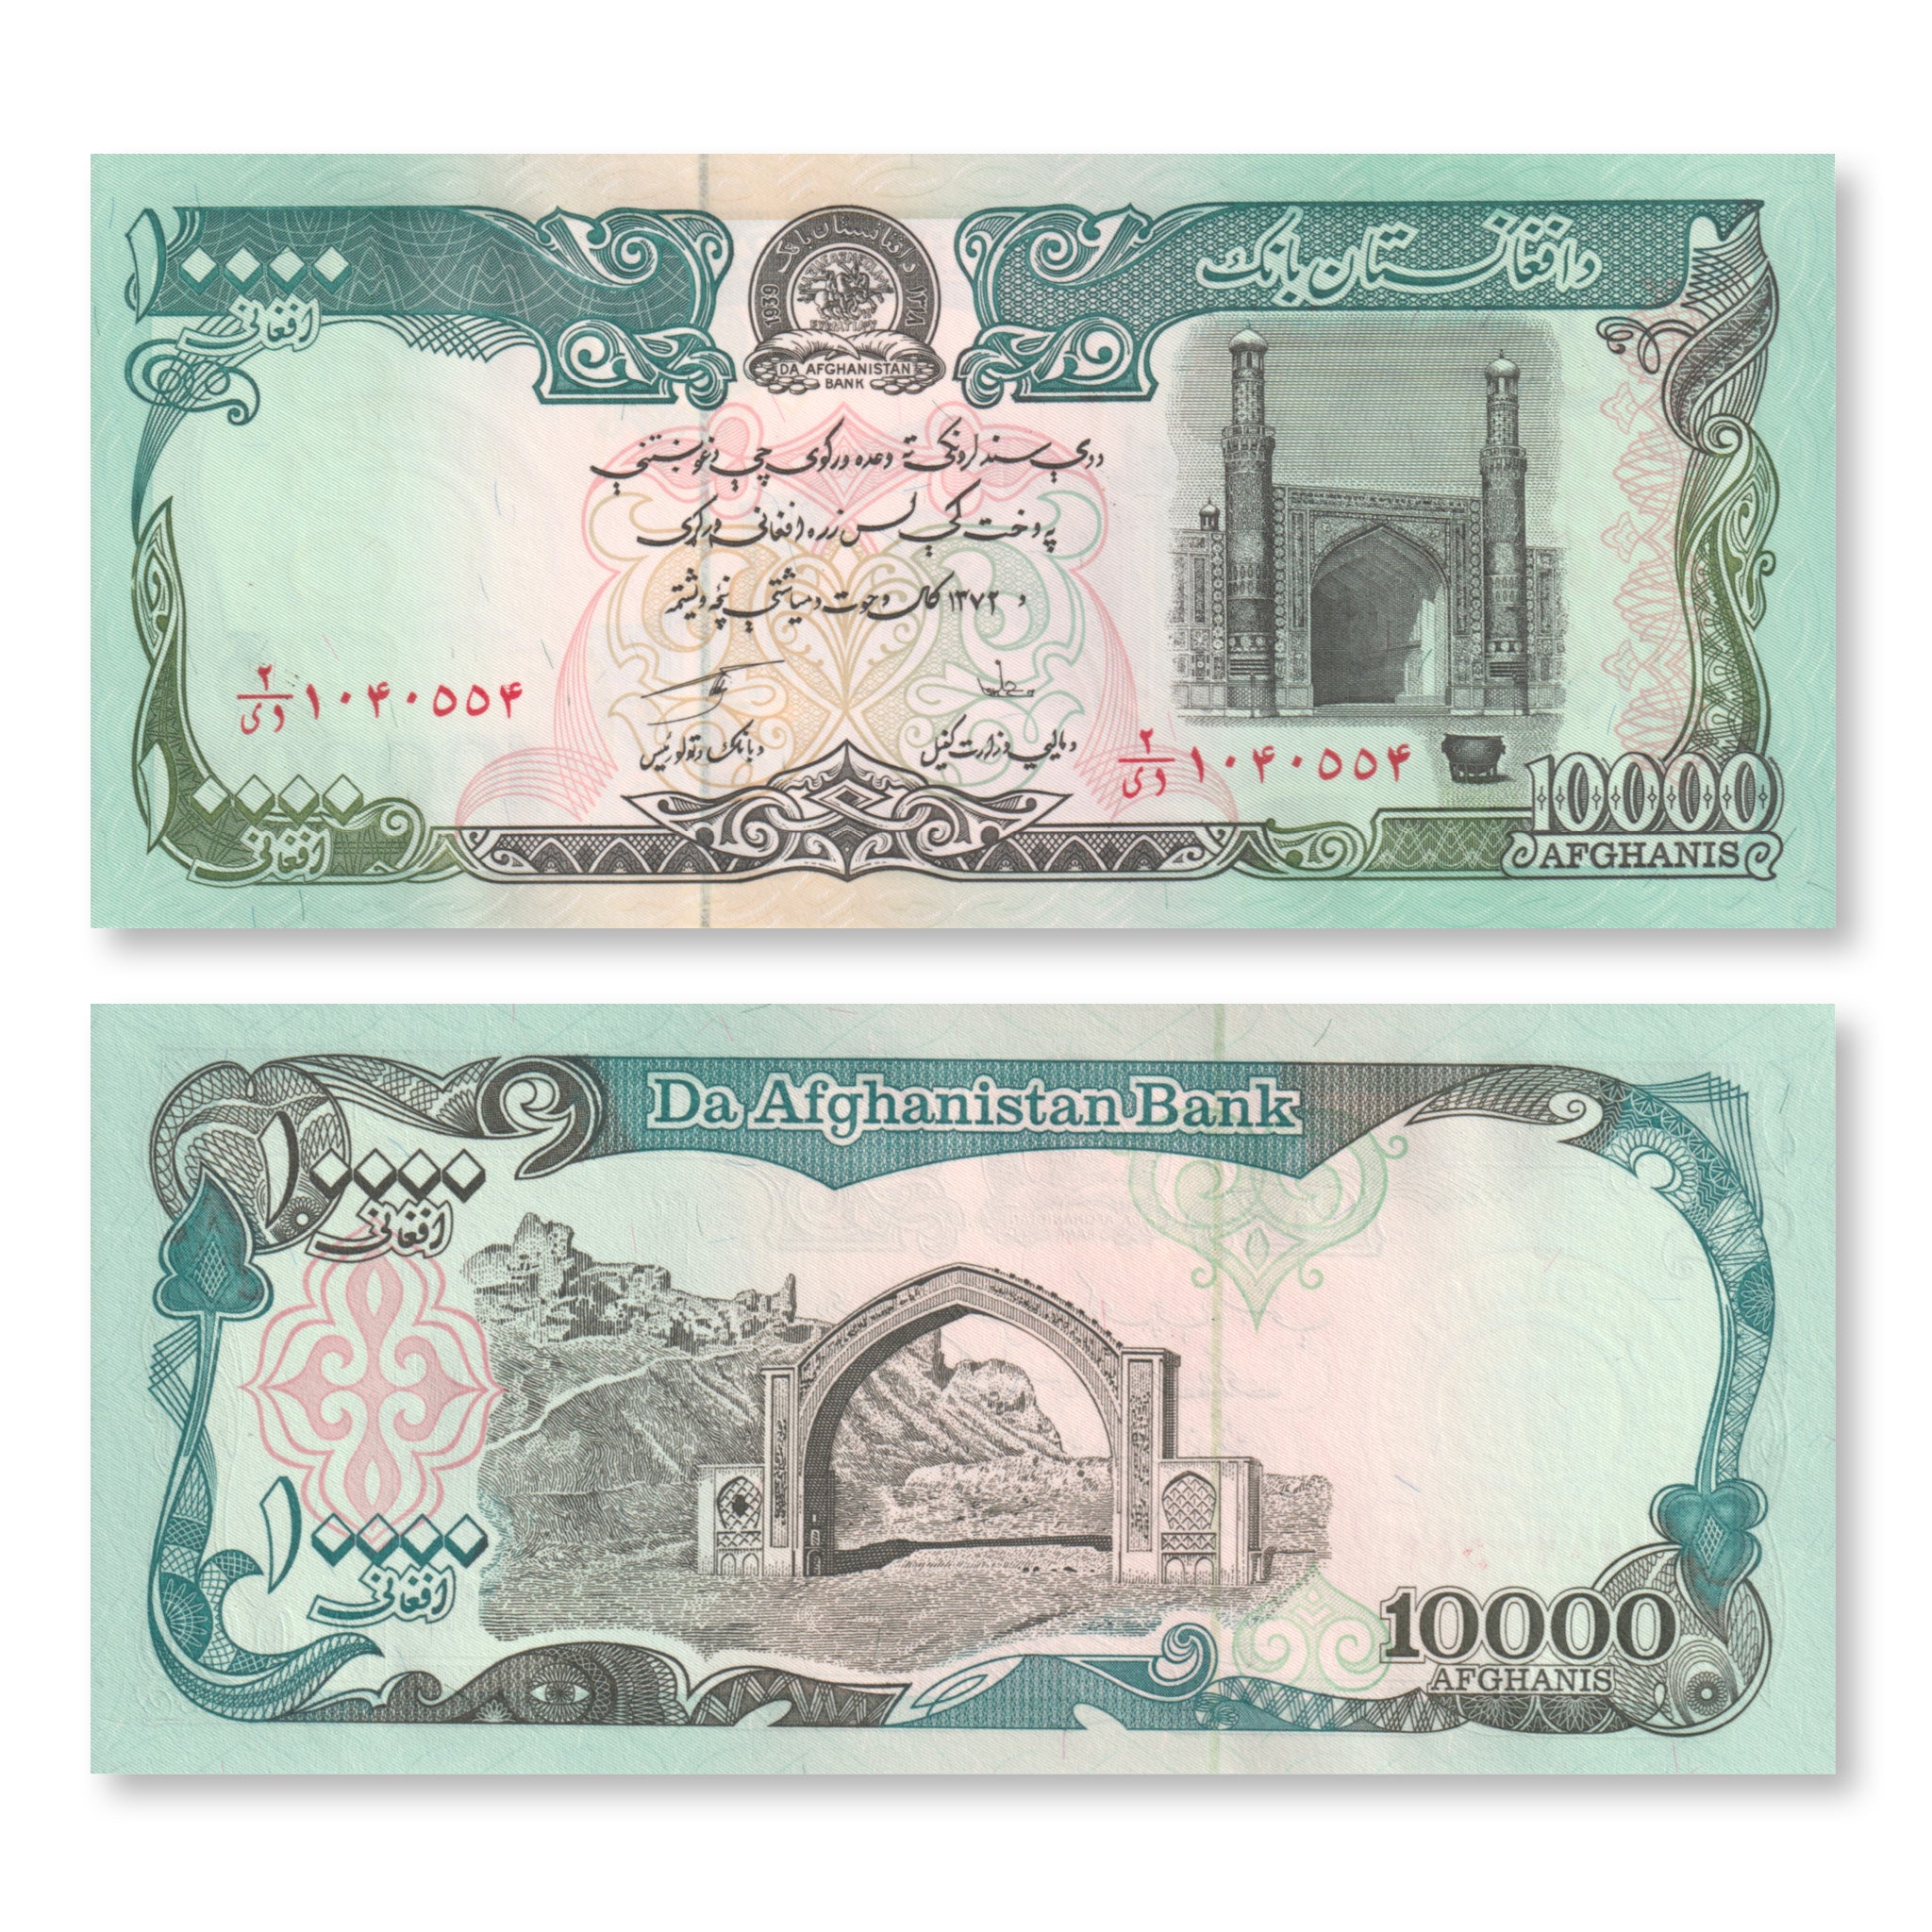 Afghanistan 10000 Afghanis, 1993, B347b, P63b, UNC - Robert's World Money - World Banknotes